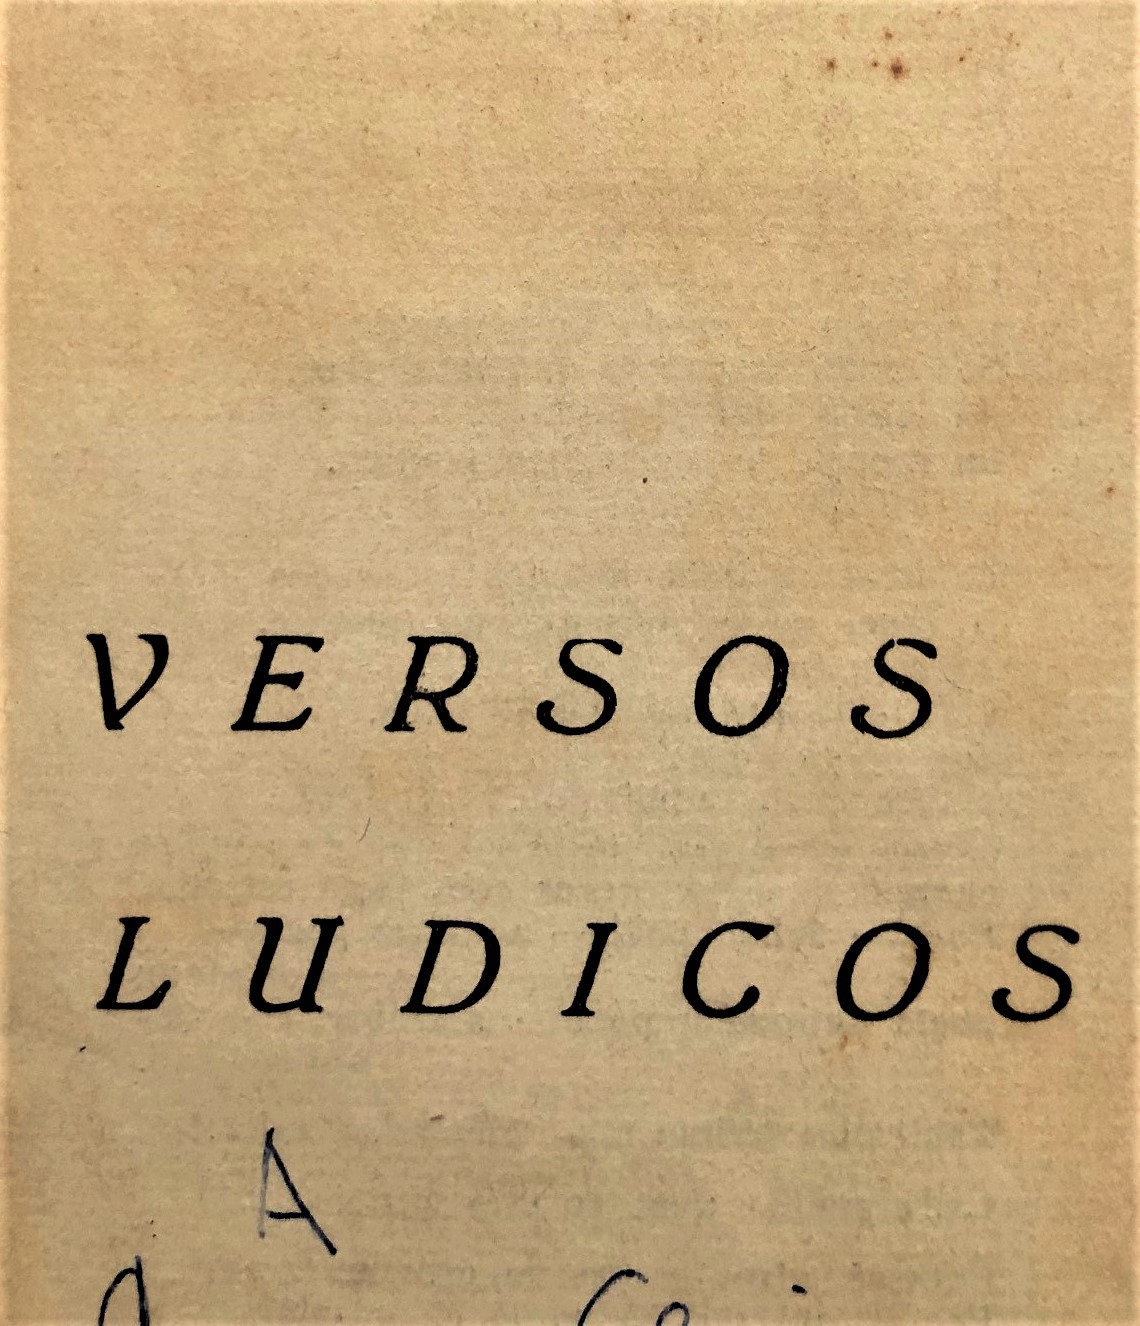 Manuel Francisco Mesa Seco - Versos lúdicos 